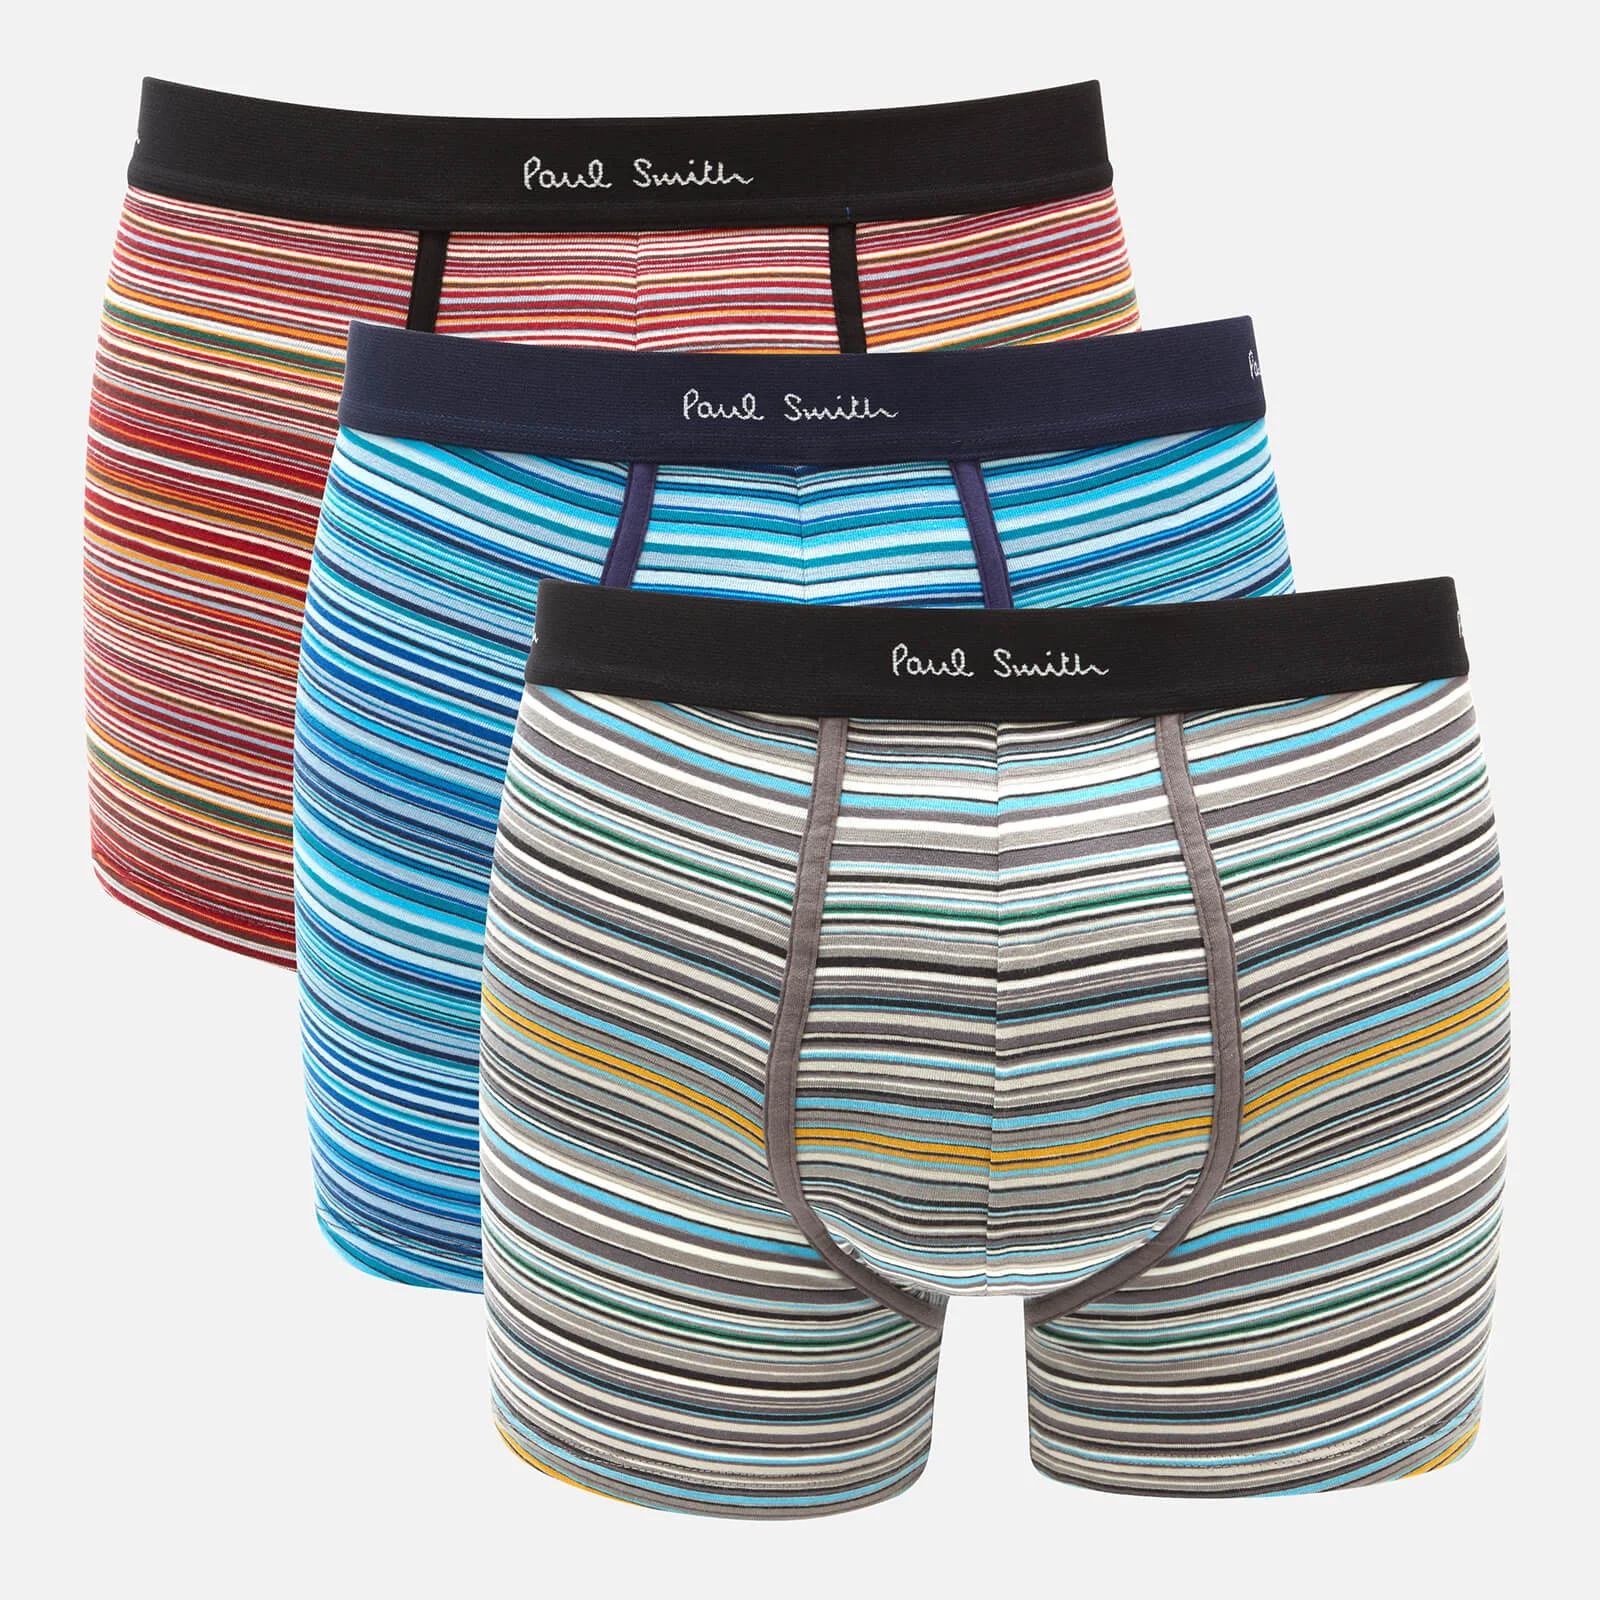 PS Paul Smith Men's 3 Pack Trunk Boxer Shorts - Multi Coloured Stripe Image 1